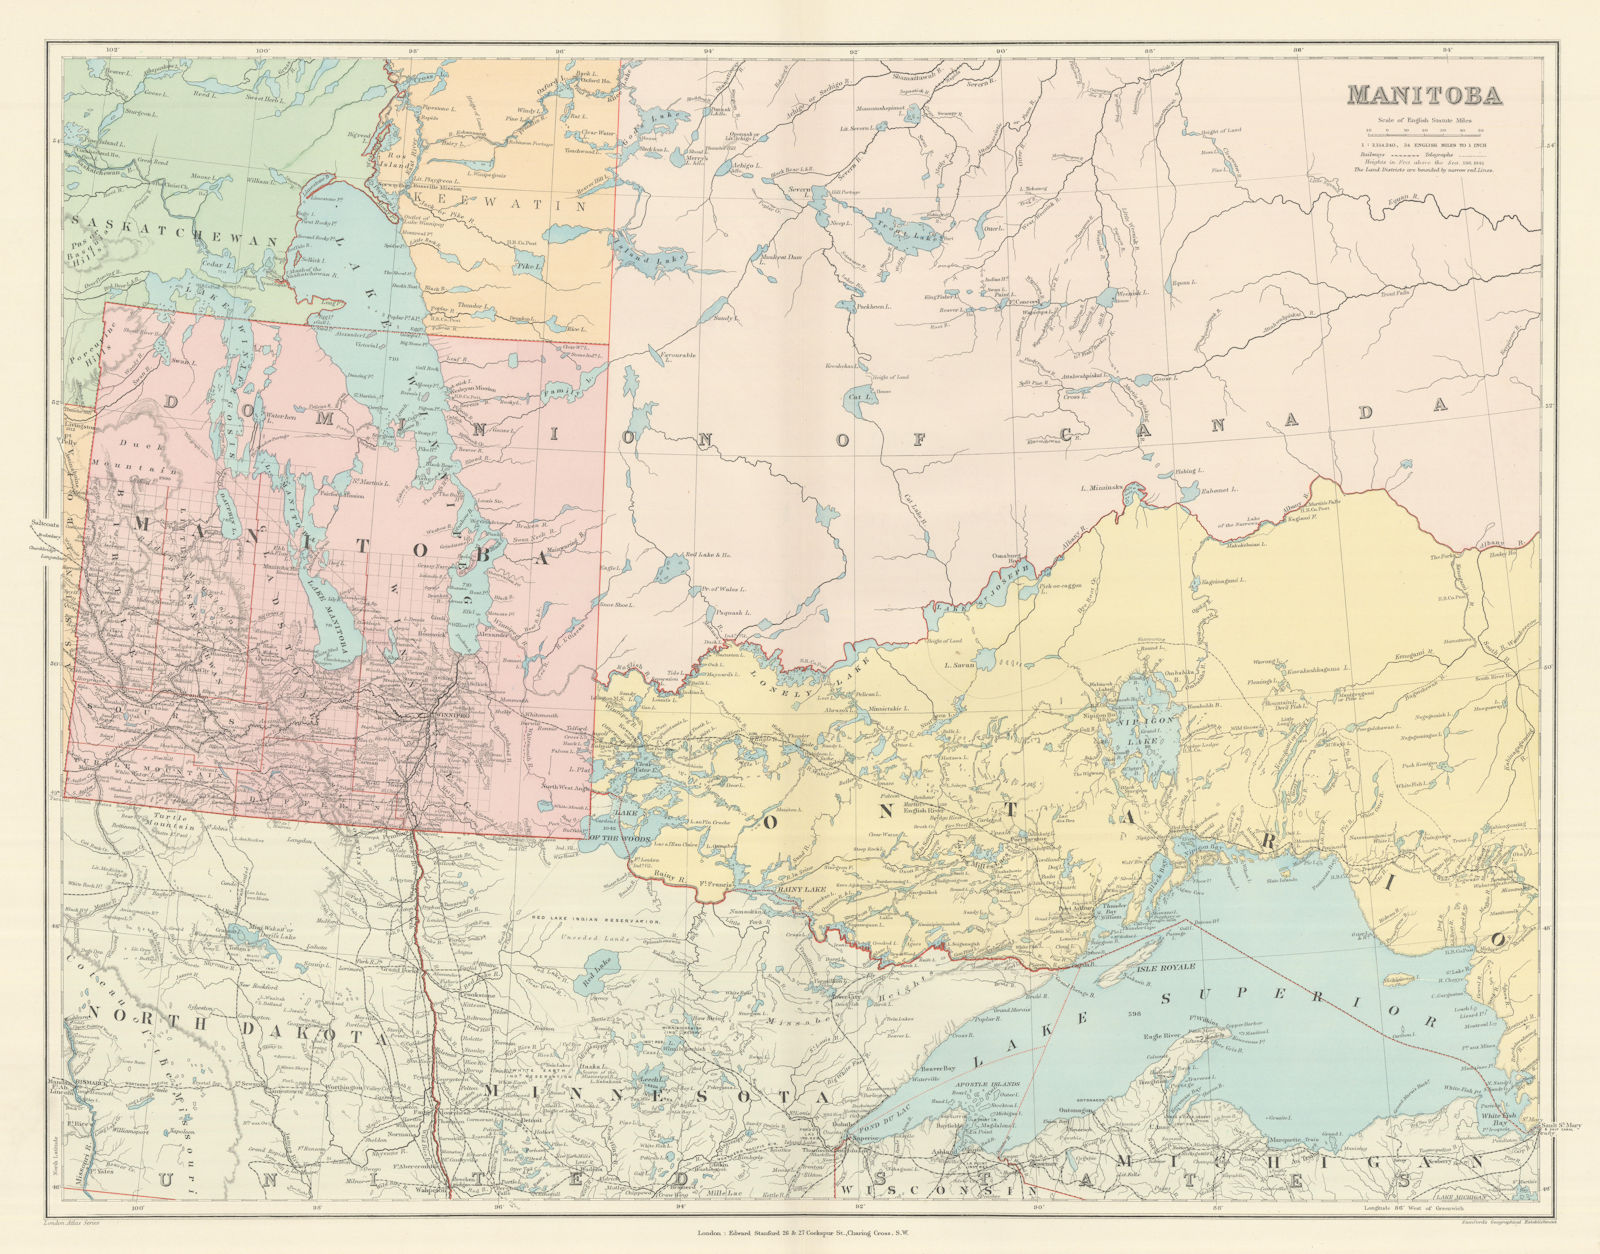 Manitoba. West Ontario, Lake Superior & Winnipeg. Canada. STANFORD 1894 map